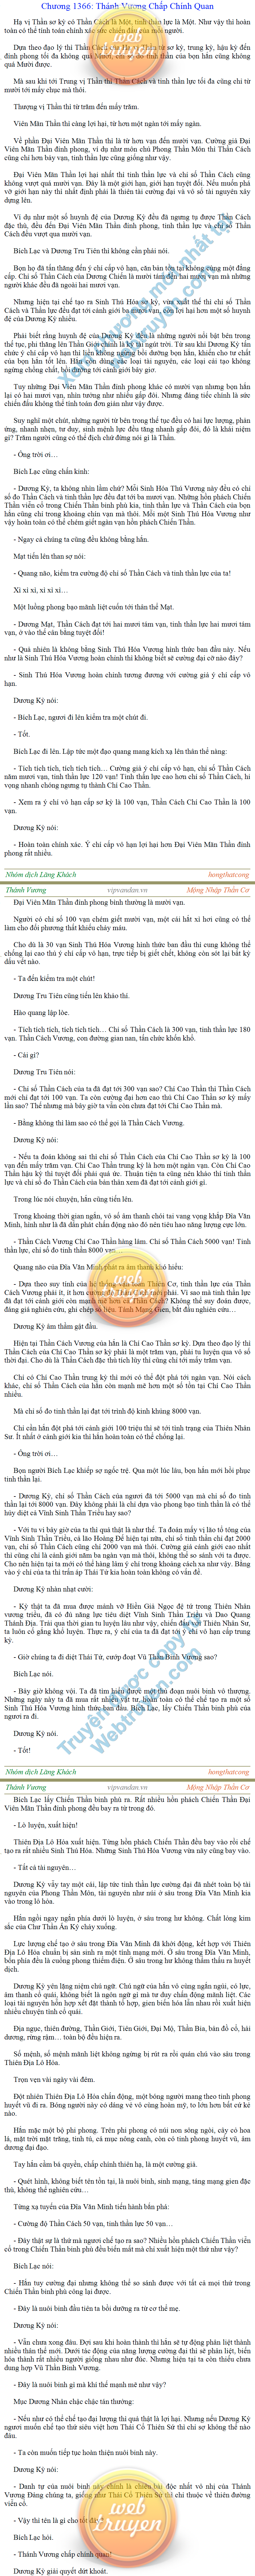 Thanh-vuong-1366.png